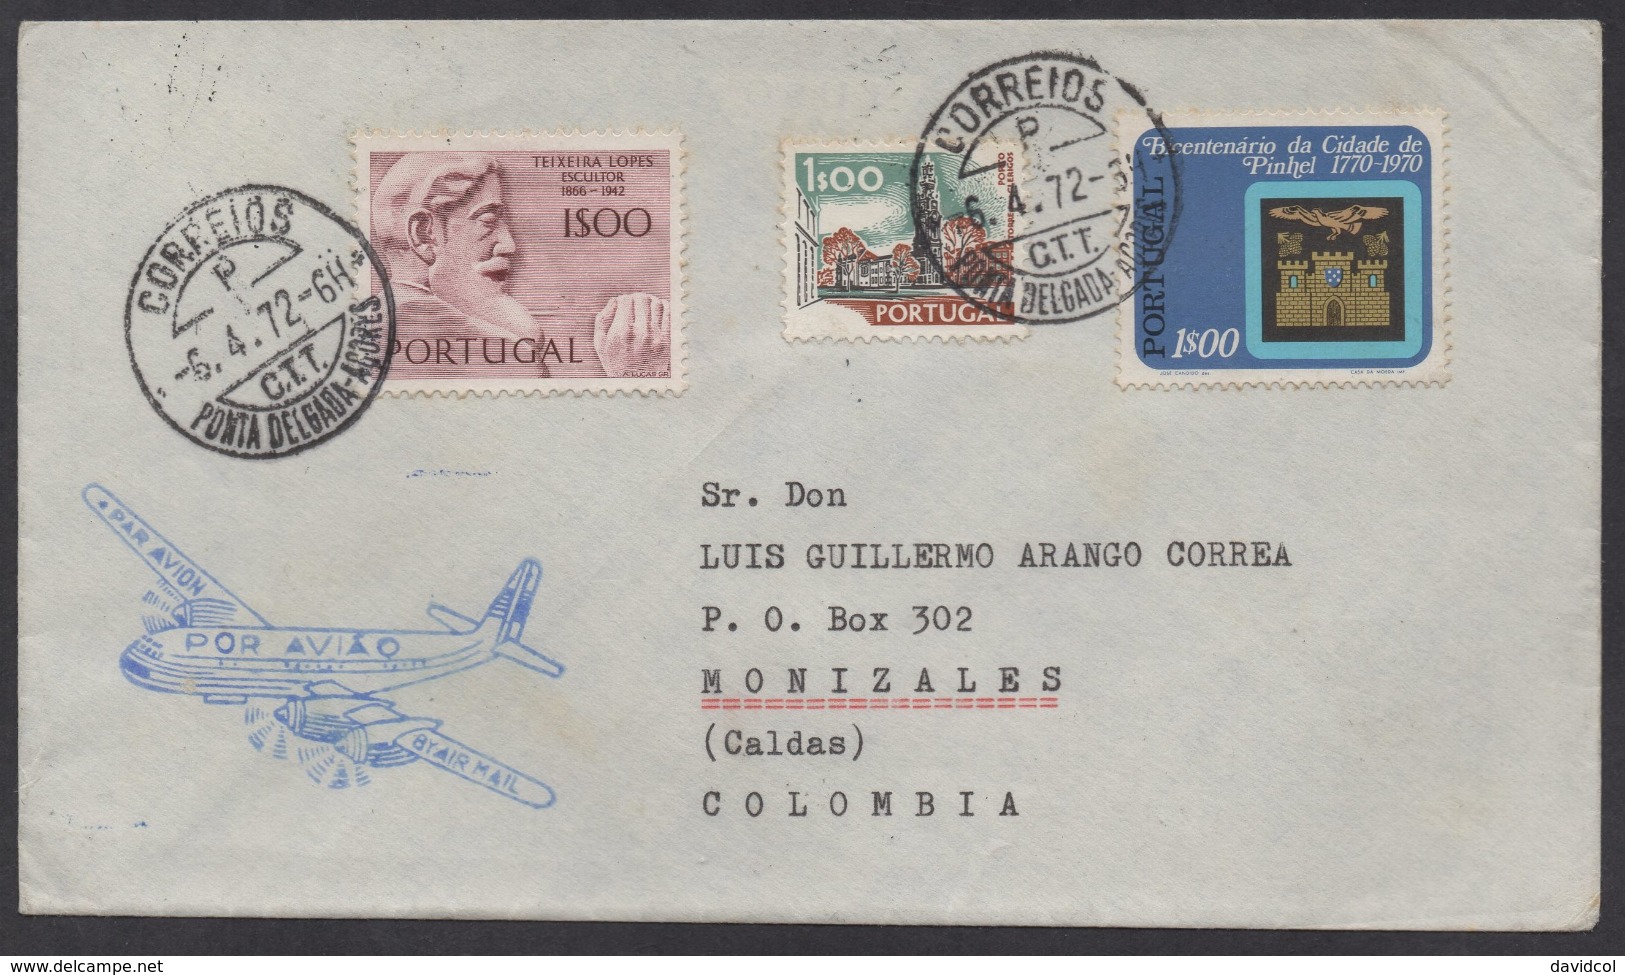 SA184- PORTUGAL-AZORES - 1972 - PONTA DELGADA 6-4-72 TO MANIZALES-CALDAS-COLOMBIA 12-IV-72 - Africa Portoghese